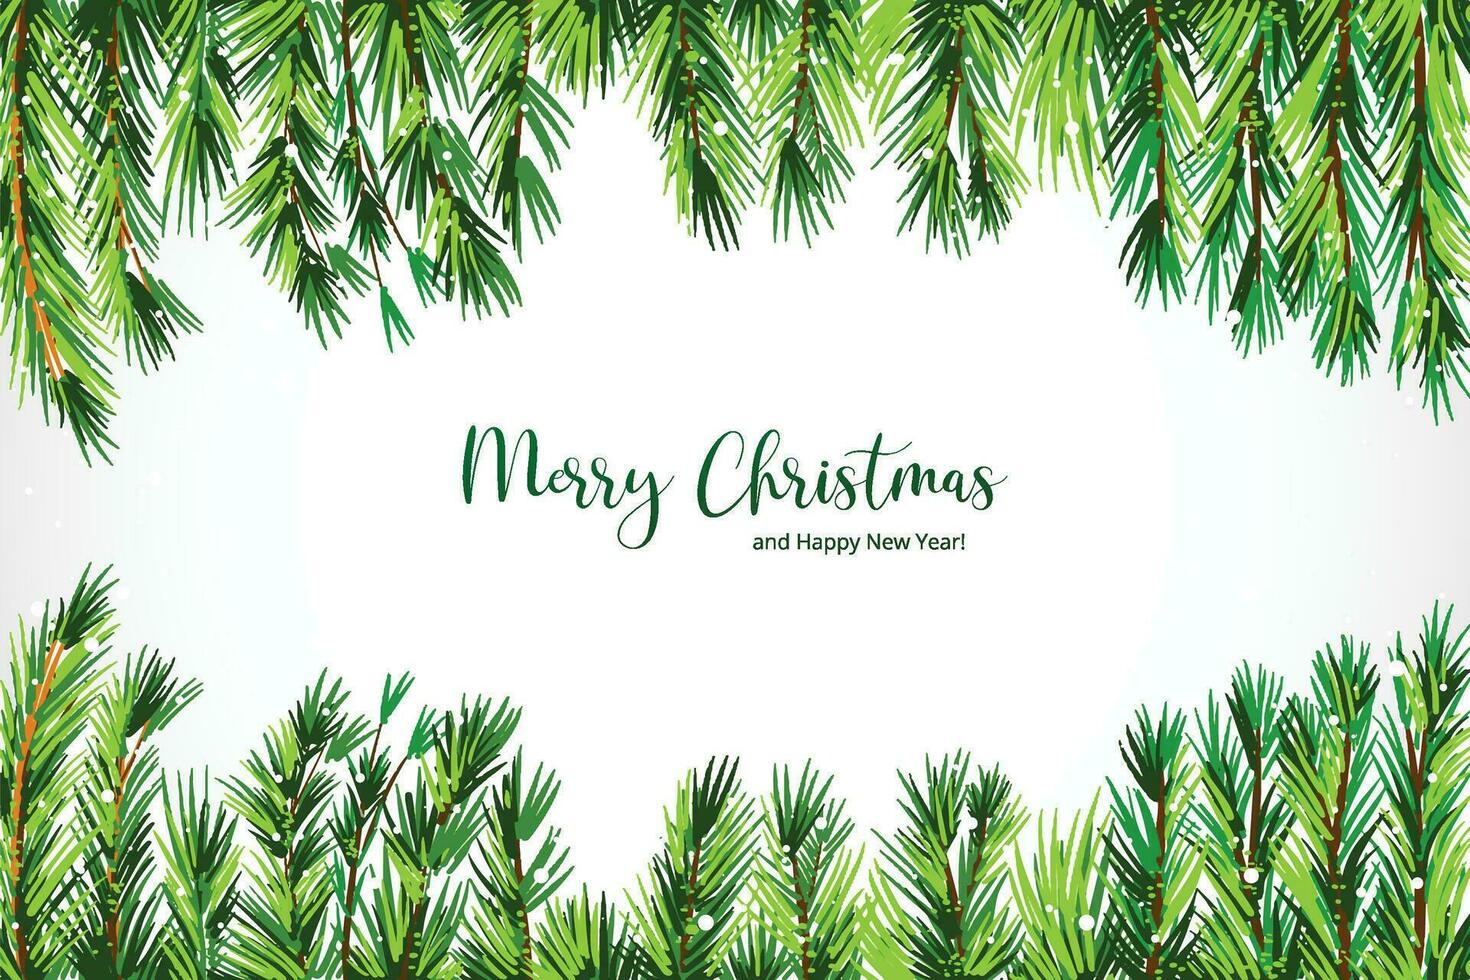 Christmas wreath holiday card background vector